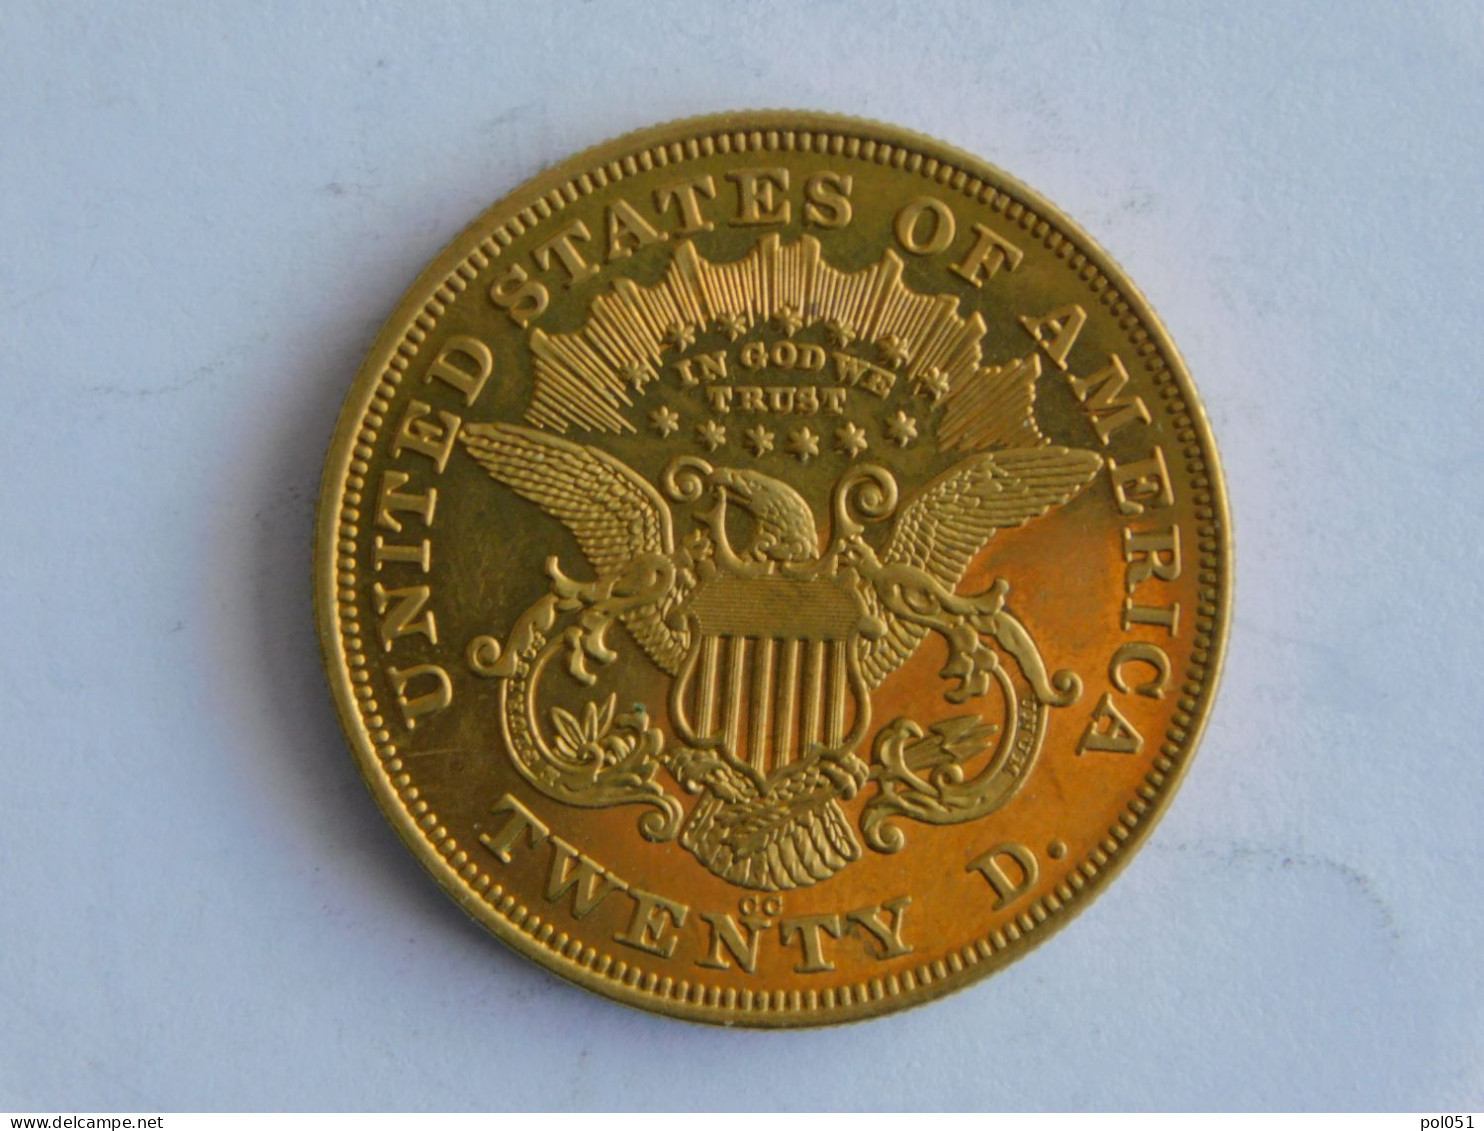 USA 20 TWENTY DOLLAR 1870 CC OR GOLD Dollars Copie Copy - 20$ - Double Eagles - 1877-1901: Coronet Head